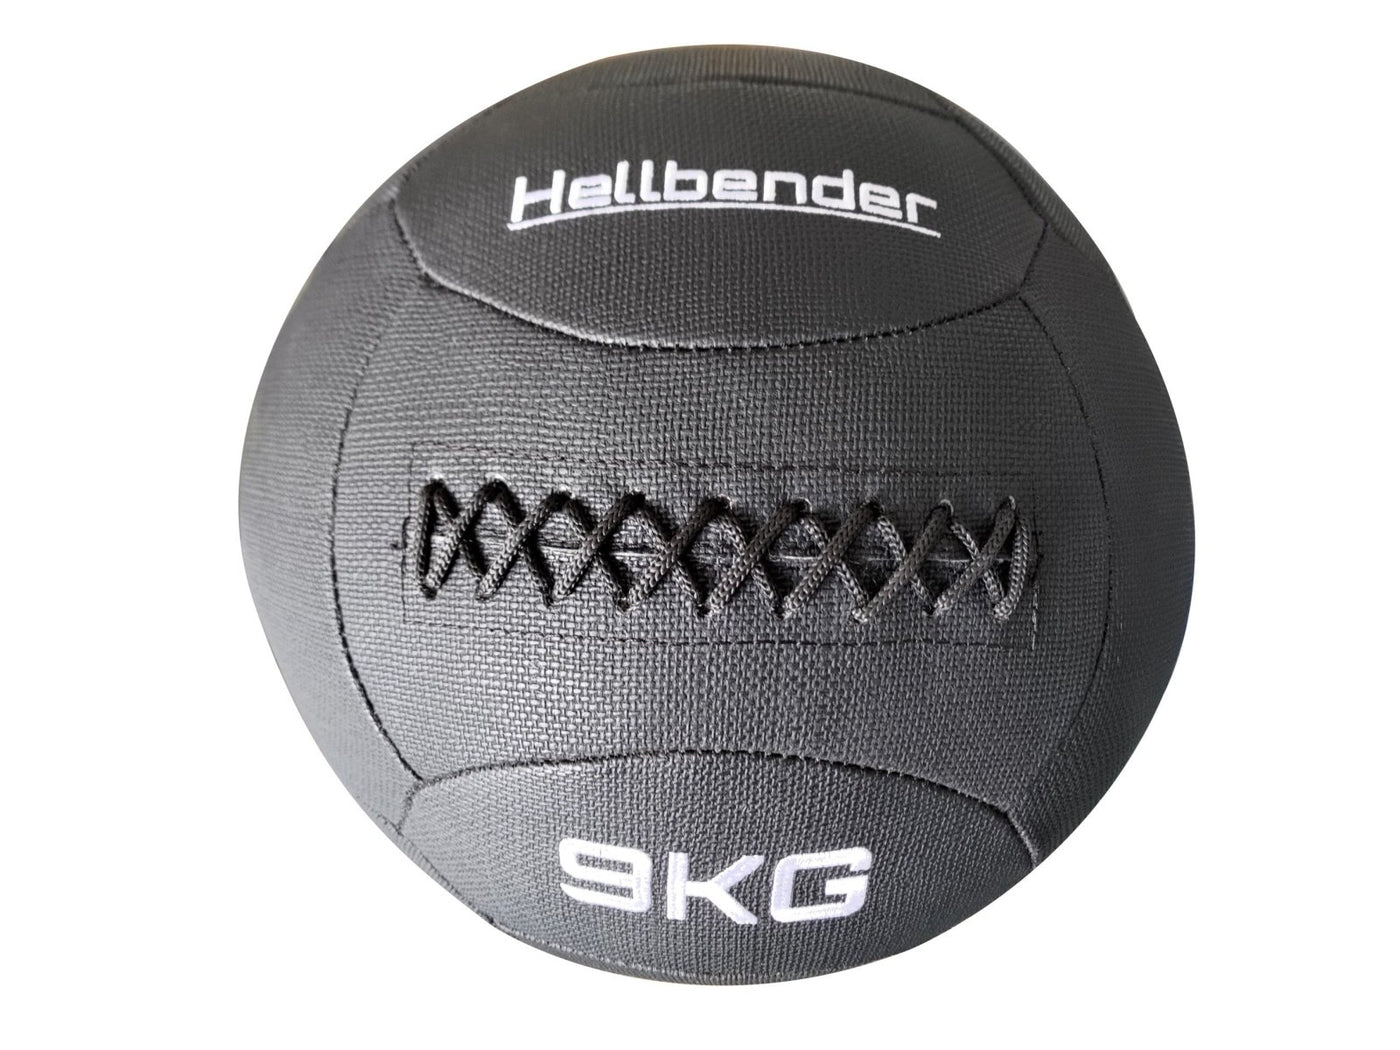 Medicinbold 9 kg - Wall ball 9 kilo - HellbenderFitness